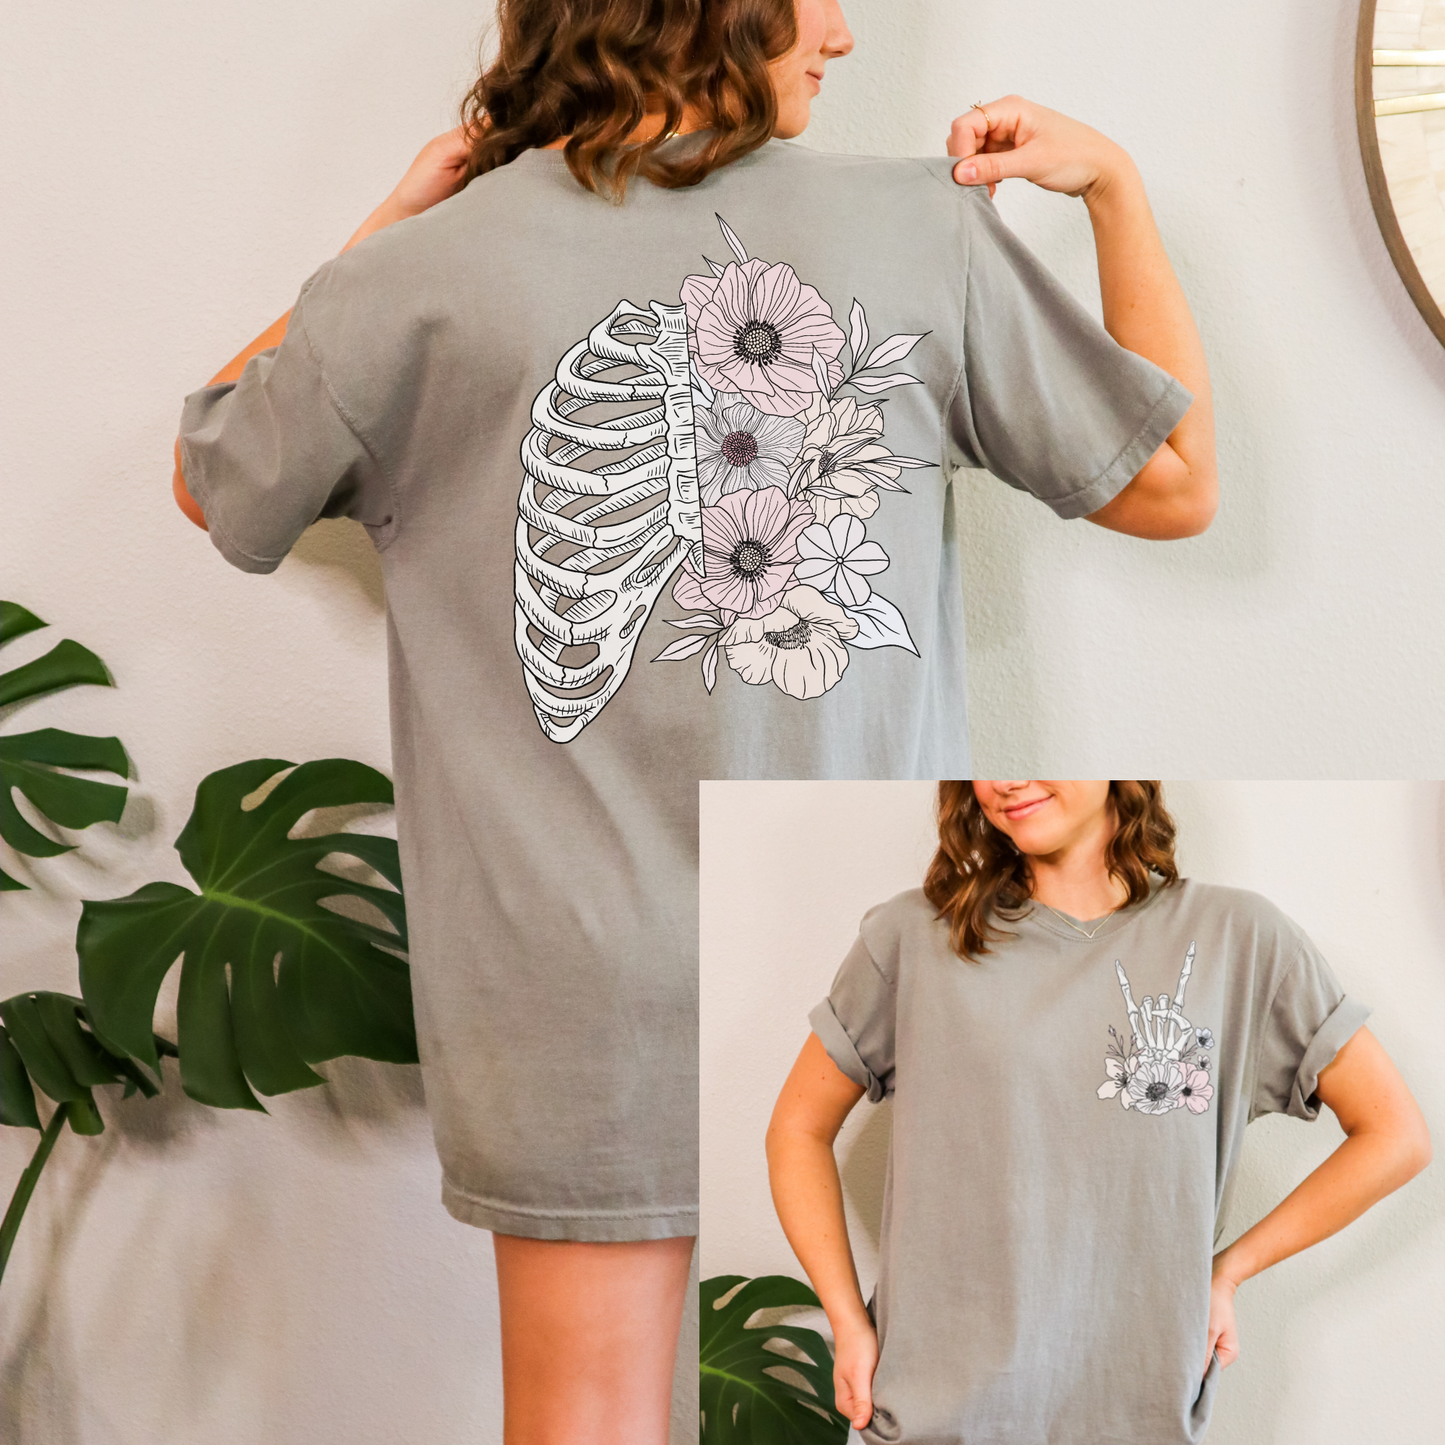 Rock and Roll T-Shirt, Flower Floral Print Shirt, Lung Pulmonary Breathing Shirt, Nurse Doctor Shirt, Gift for Nurse or Doctor, Pretty Cute Nurse Shirt